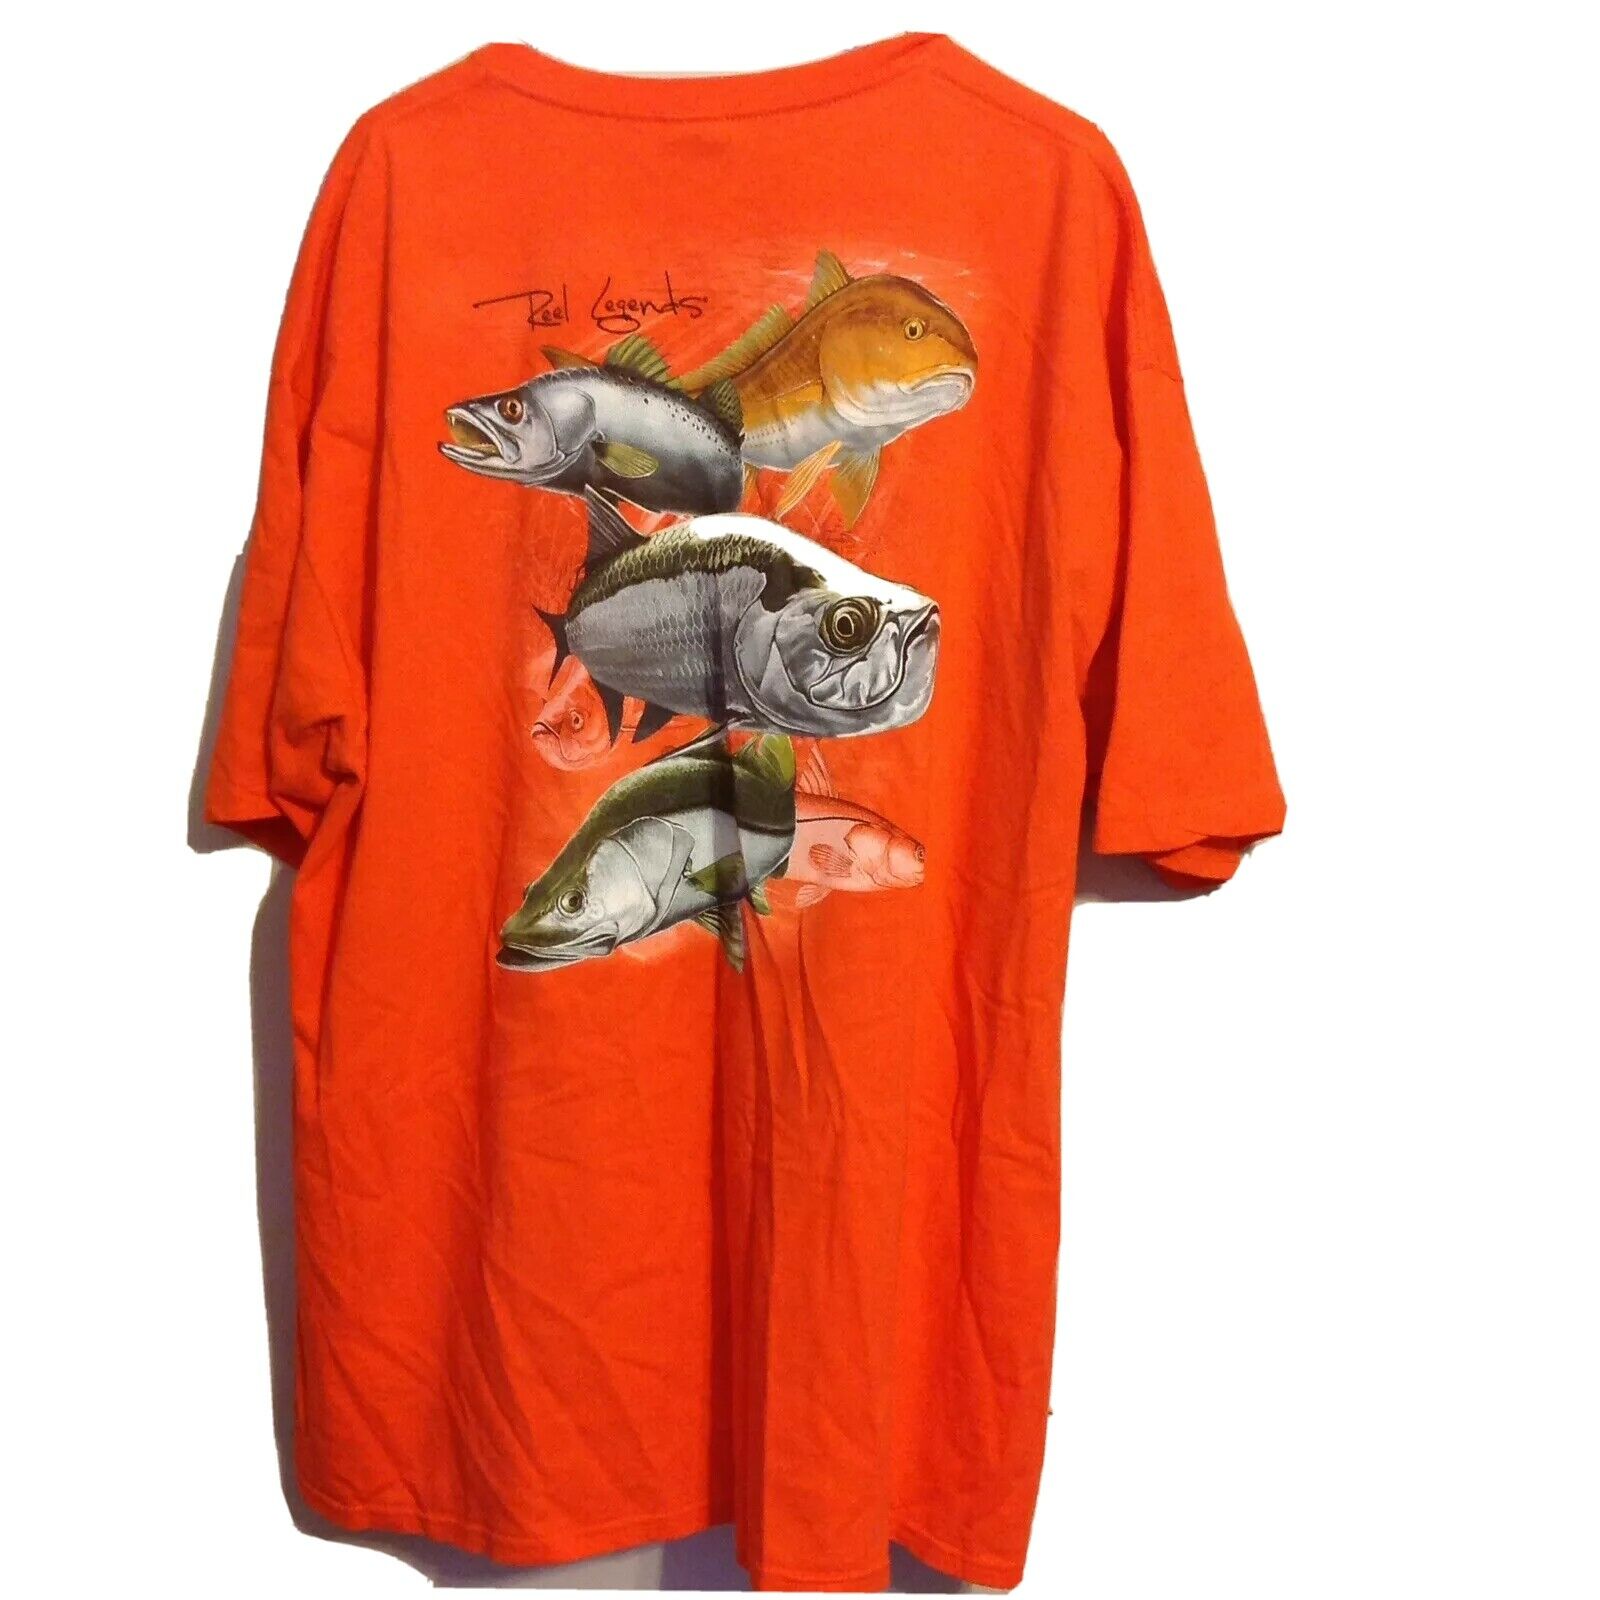 Anvil Reel Legends 3X Men’s Orange Tshirt Shirt Bin 20